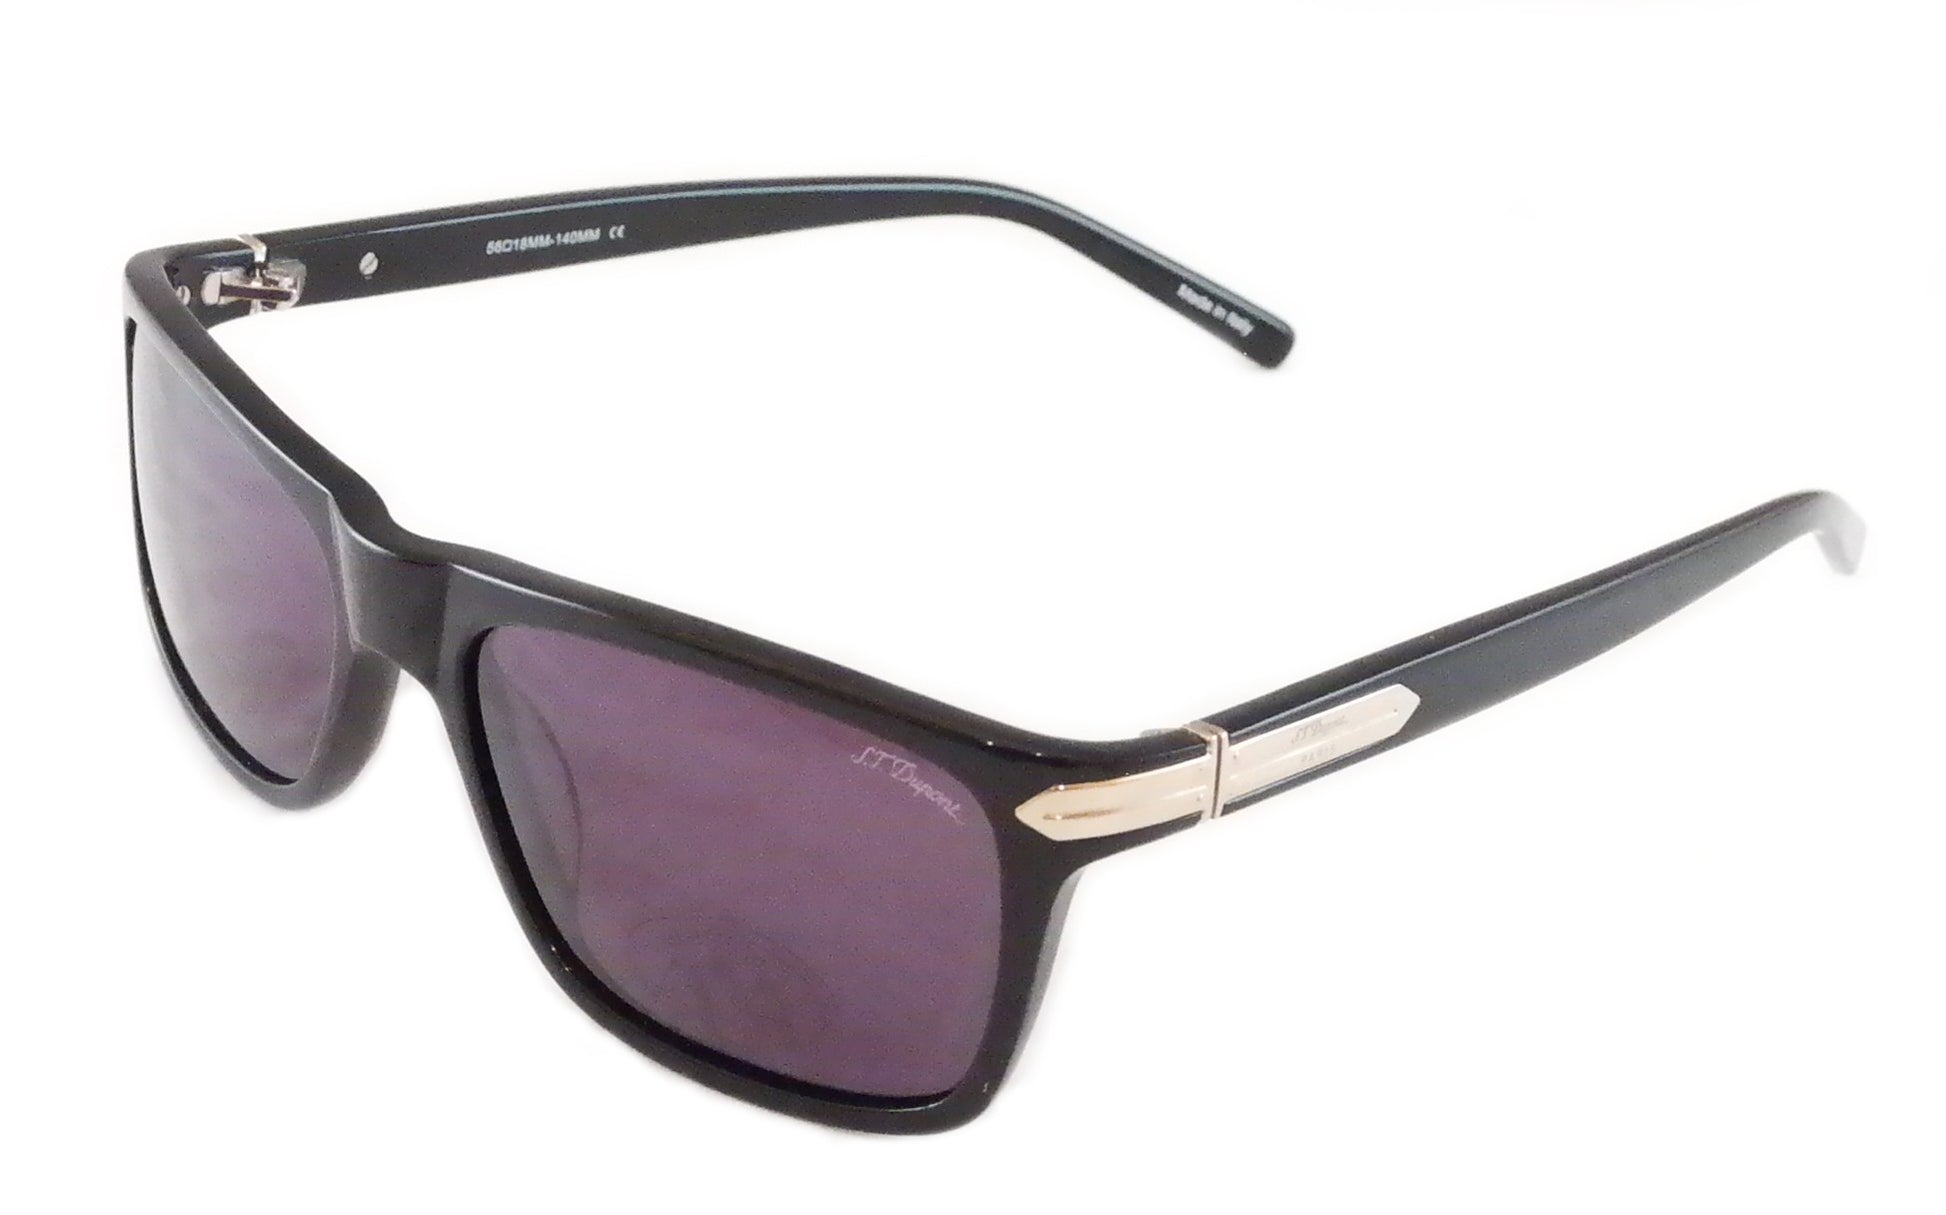 Louis Vuitton Men's Sunglasses for sale in Columbia, Missouri